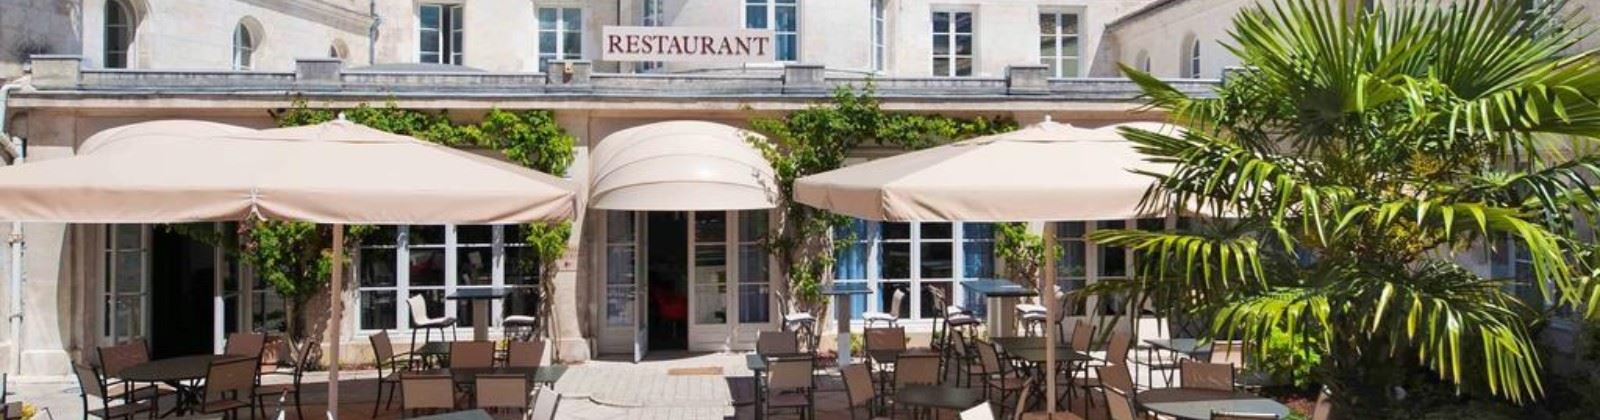 OLEVENE Image - mercure-angouleme-hotel-de-france-hotel-olevene-restaurant-seminaire-convention-